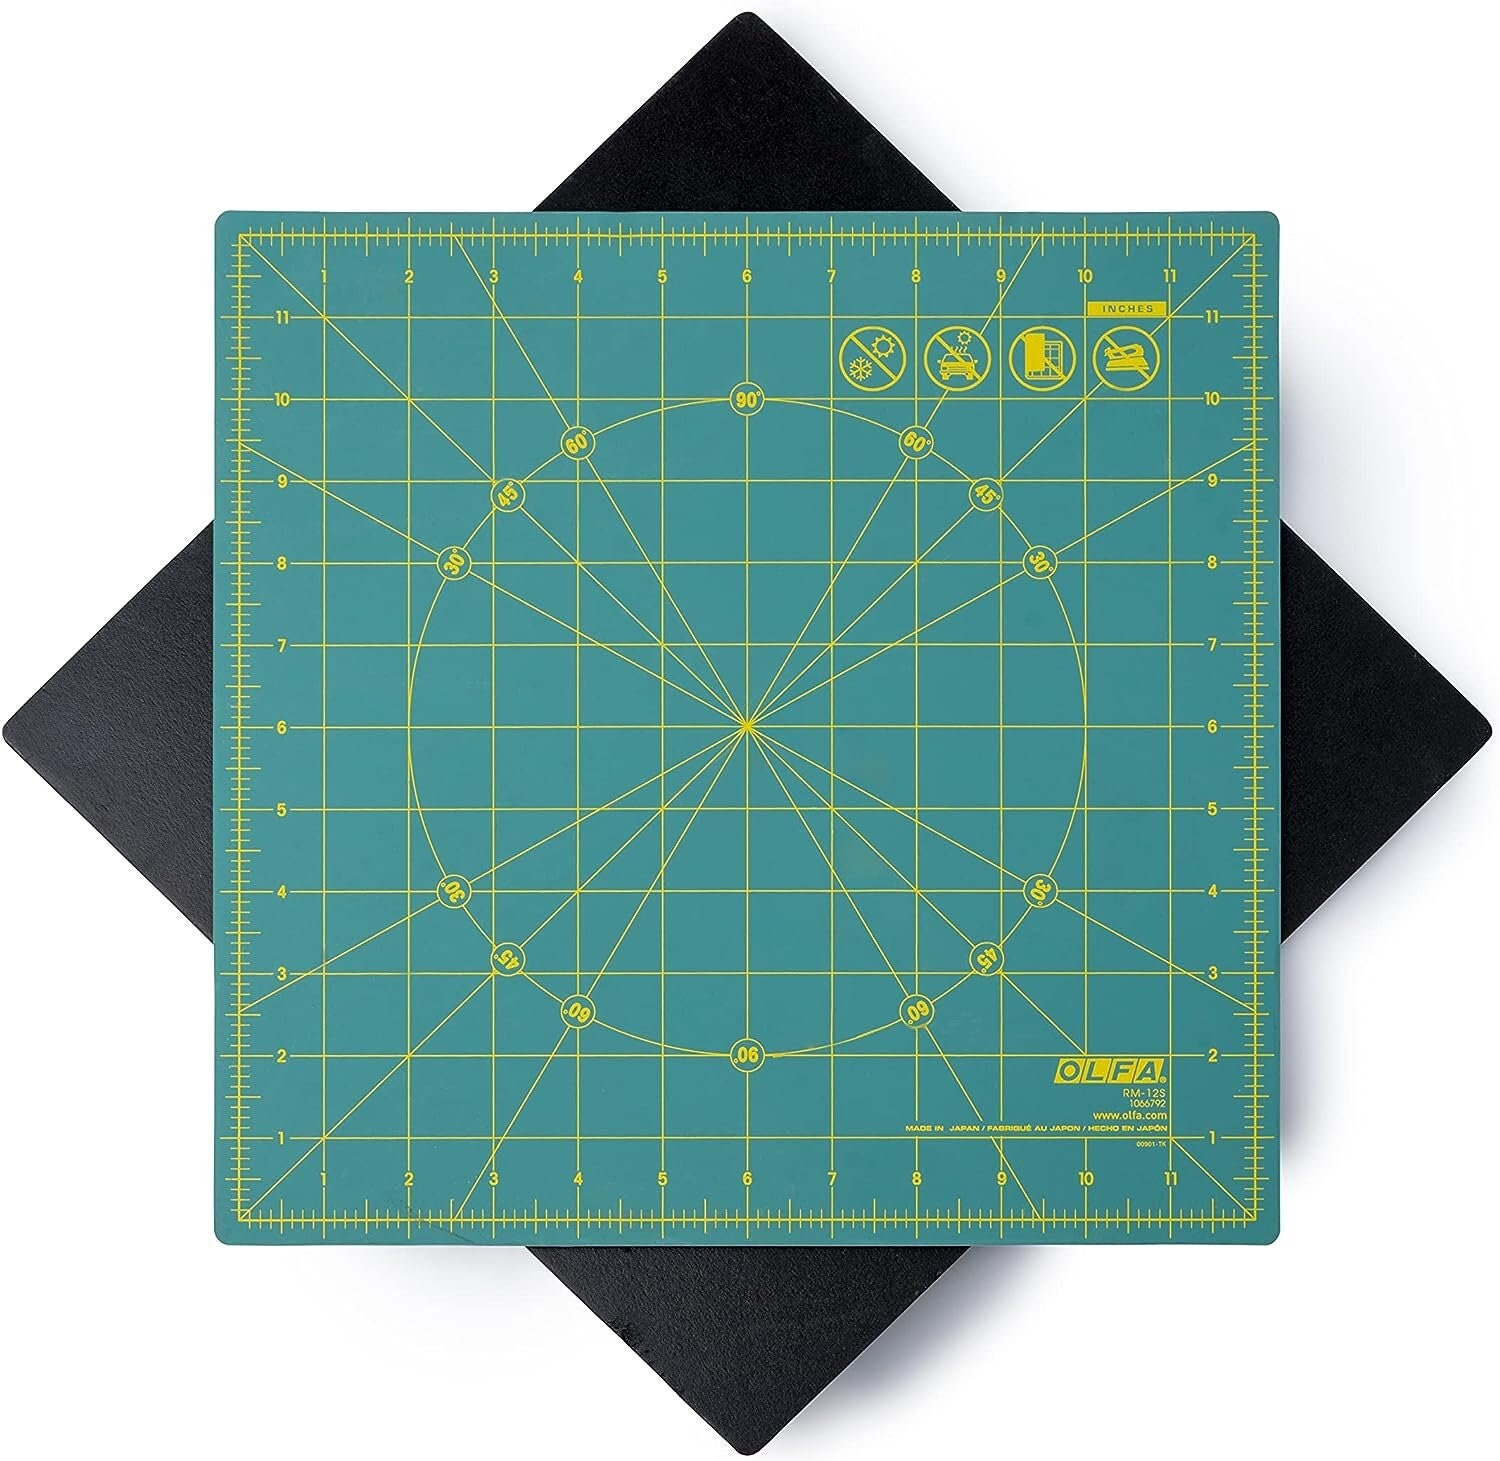 Cricut Joy StandardGrip Cutting Mat 12x16 cm Green